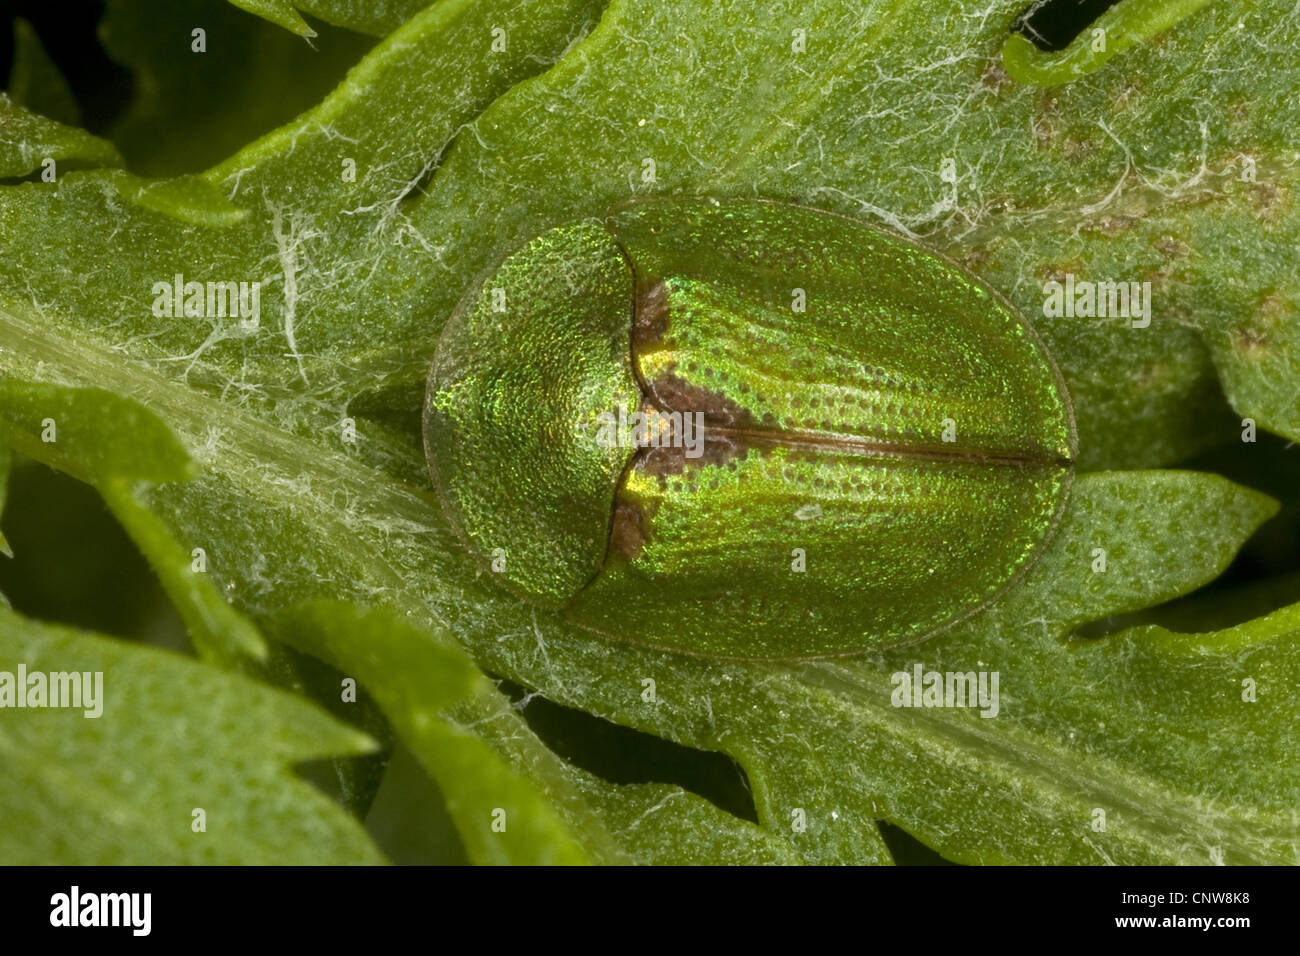 tortoise beetle, shield beetle (Cassida sanguinolenta), sitting on a leaf, Germany Stock Photo